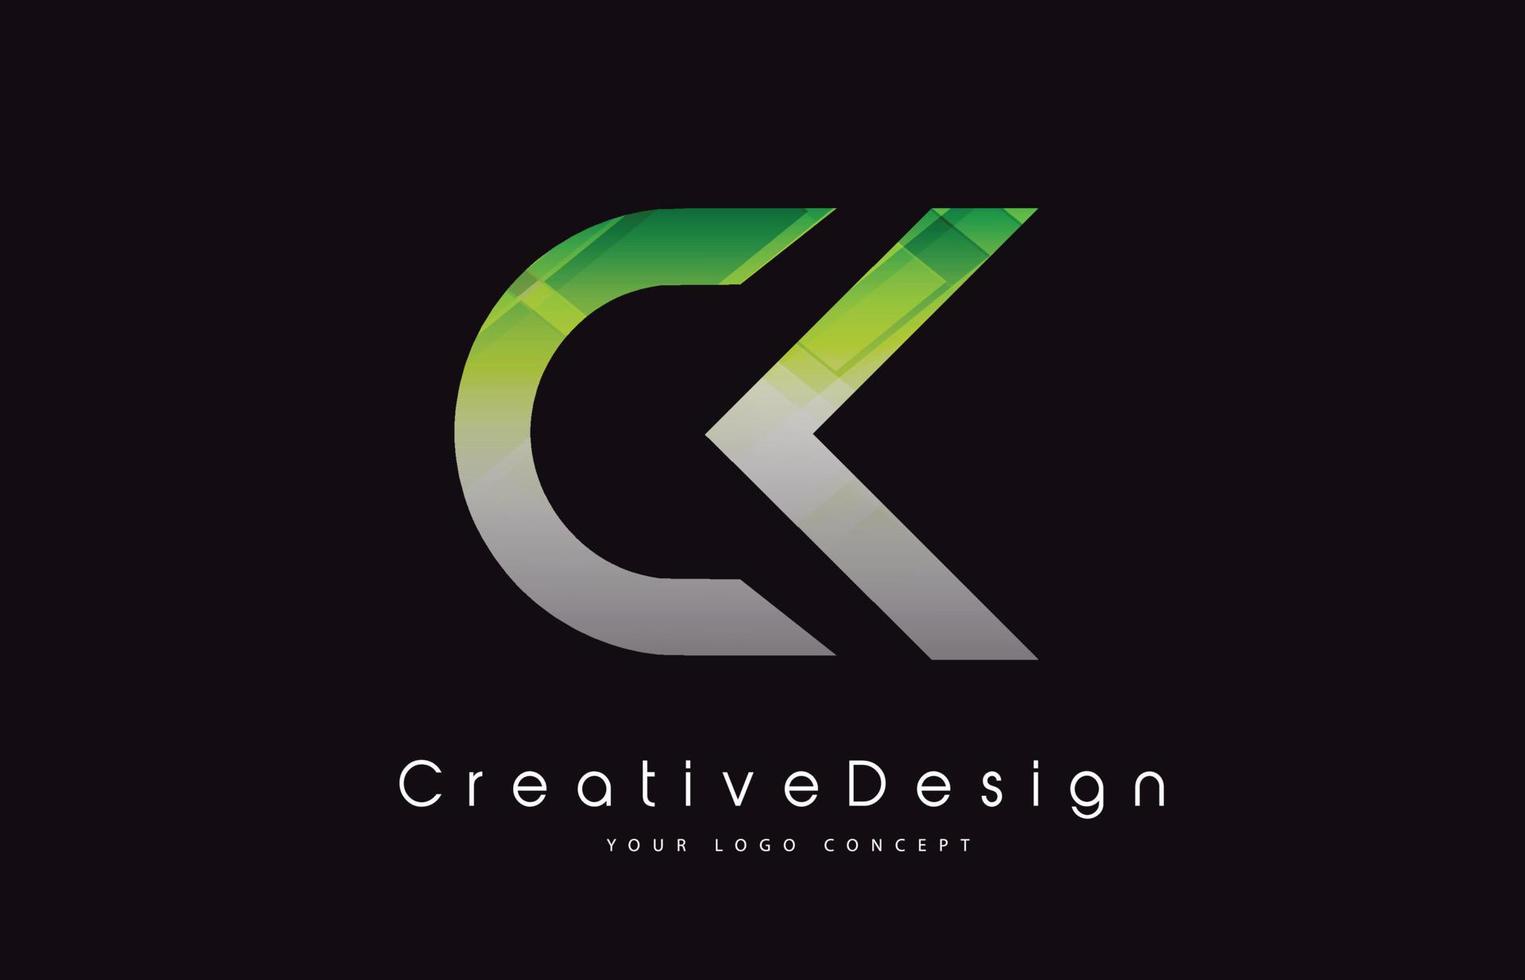 ck brief logo ontwerp. groene textuur creatieve pictogram moderne brieven vector logo.